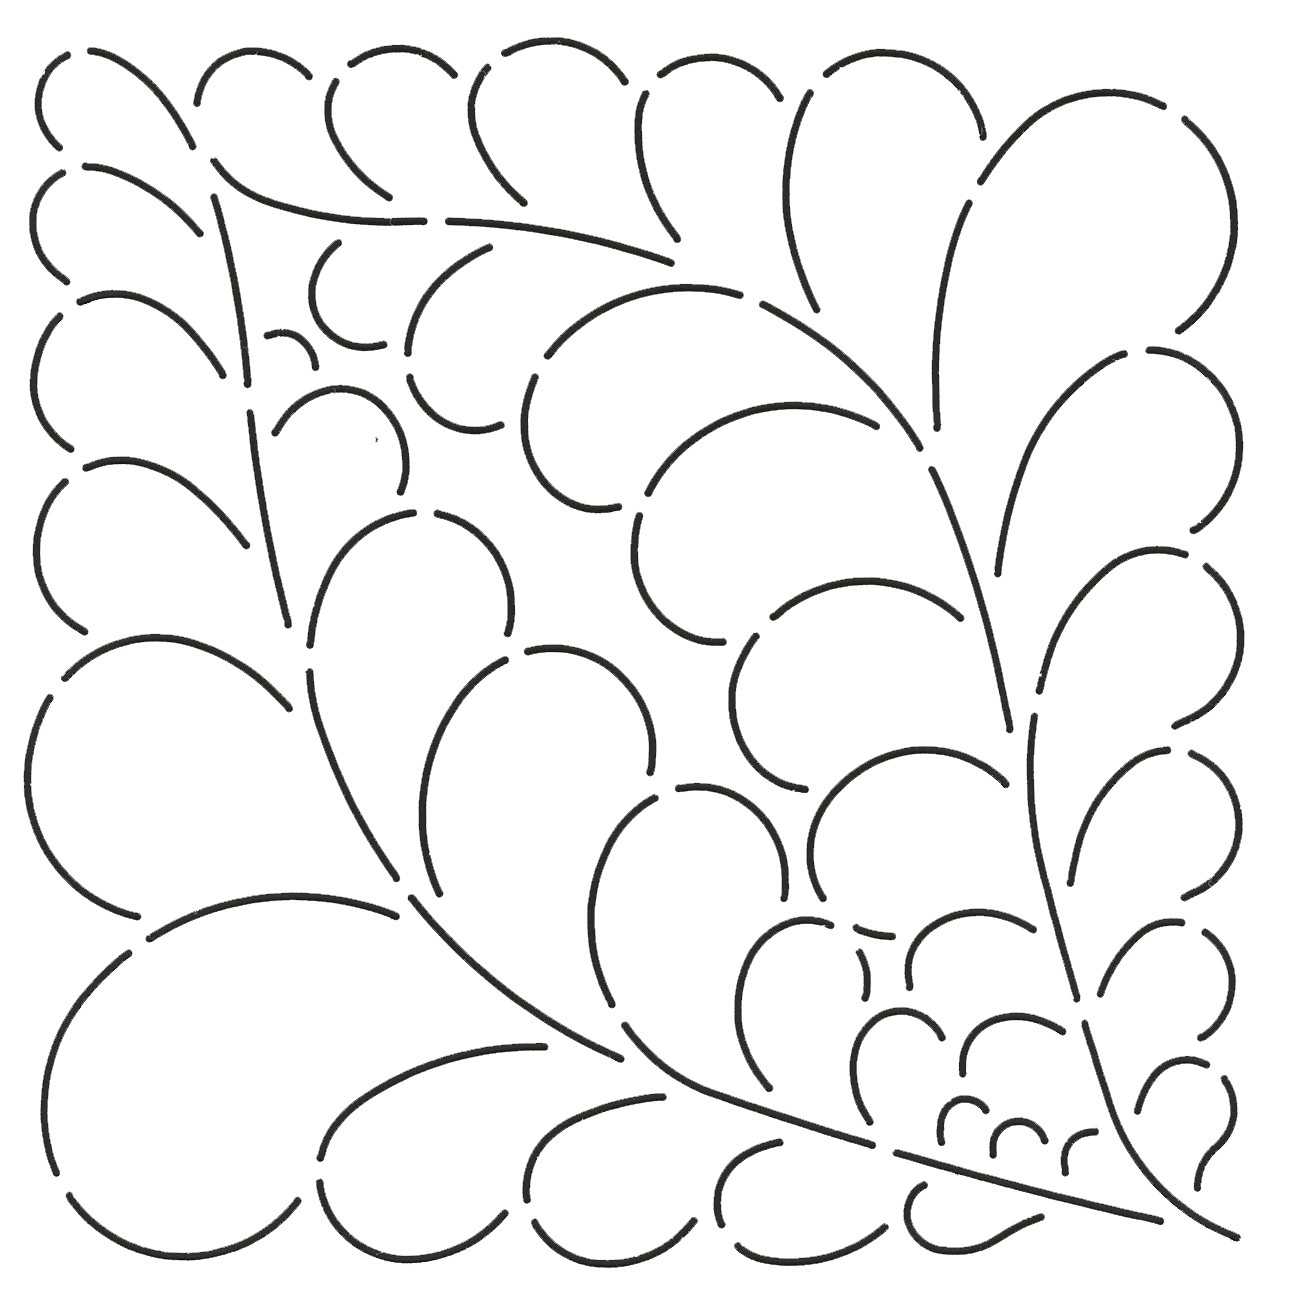 quilt-stencil-feather-block-9in-by-patten-sue